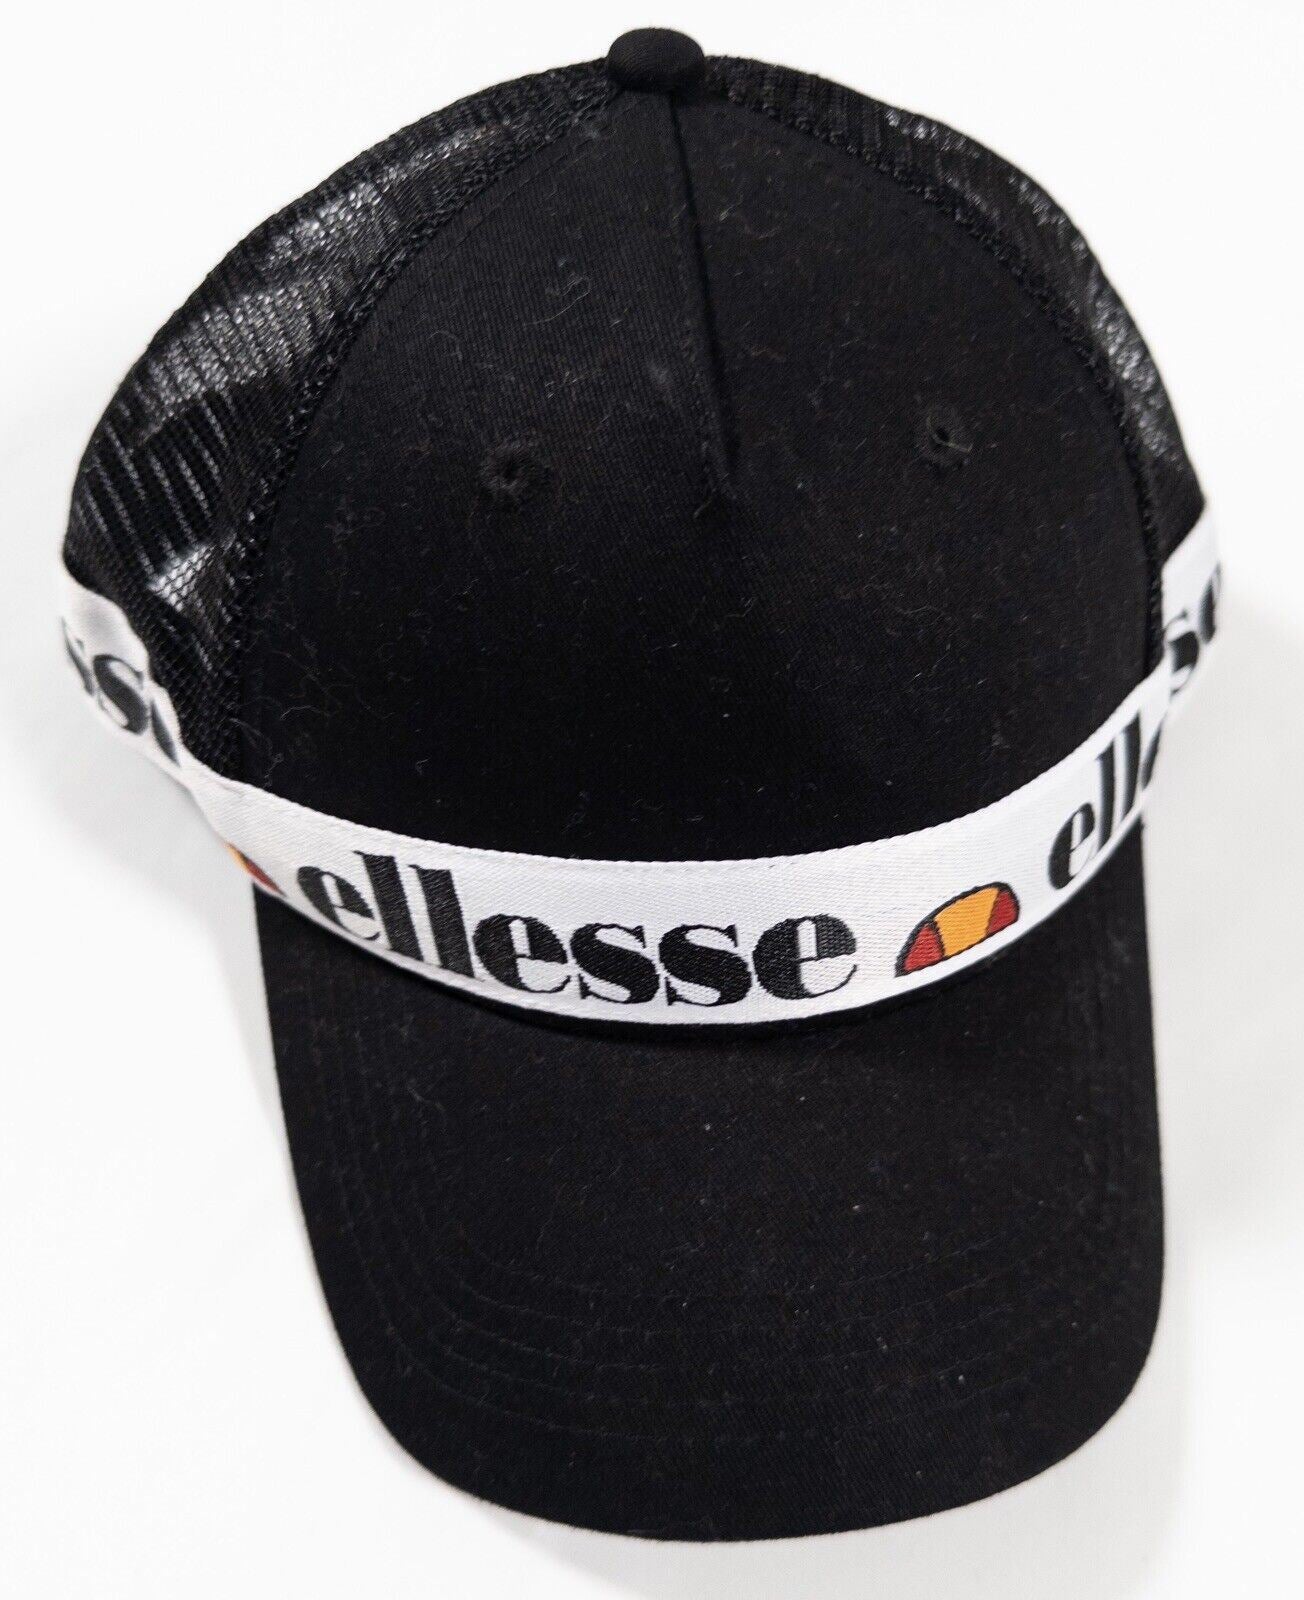 ELLESSE Men's Black Baseball Cap Hat One Size